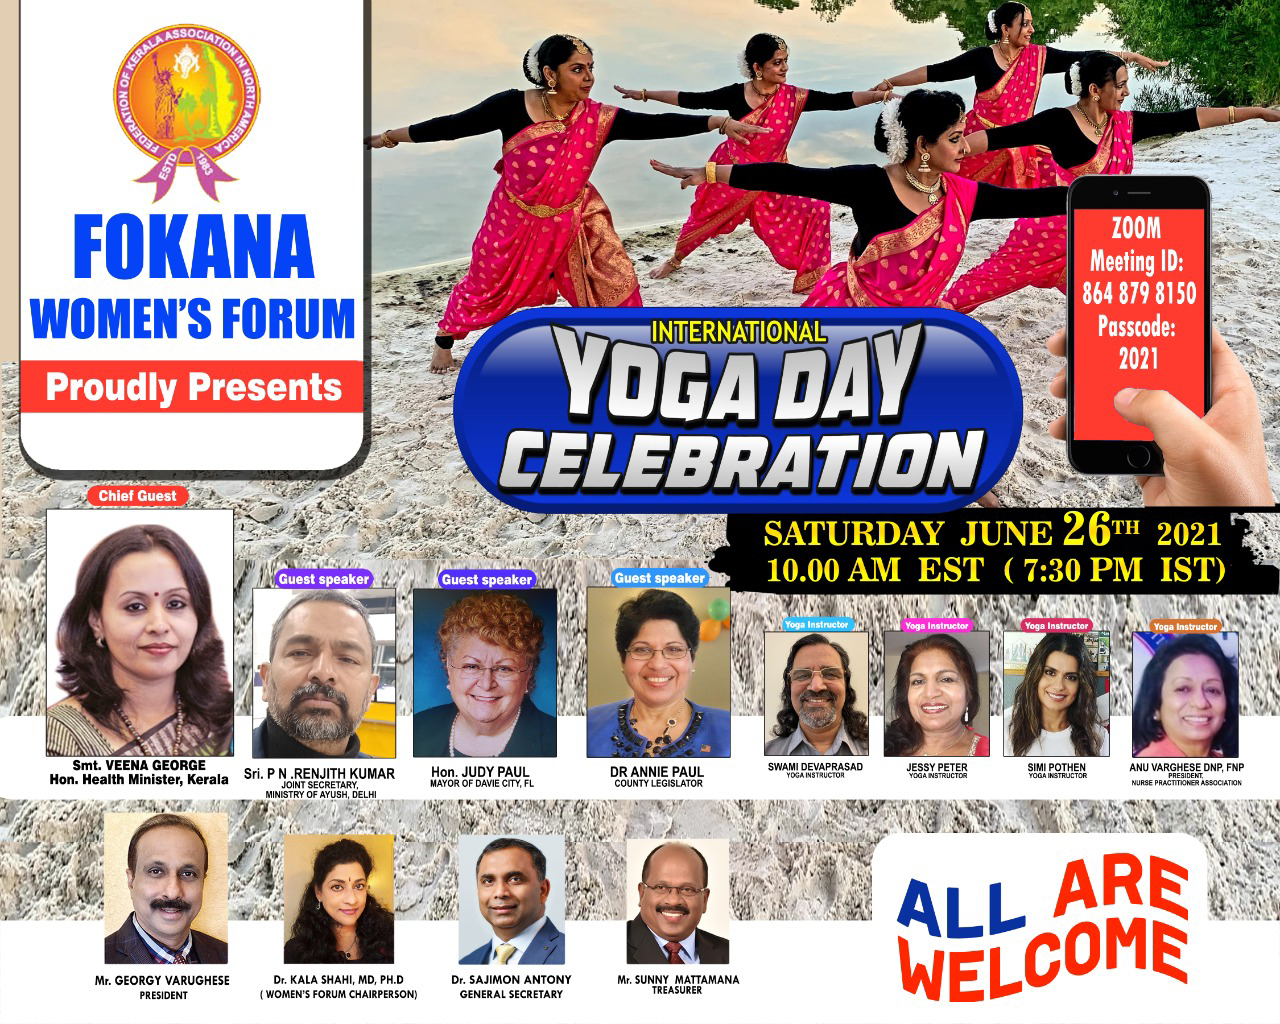 Womens Forum Yoga celebration